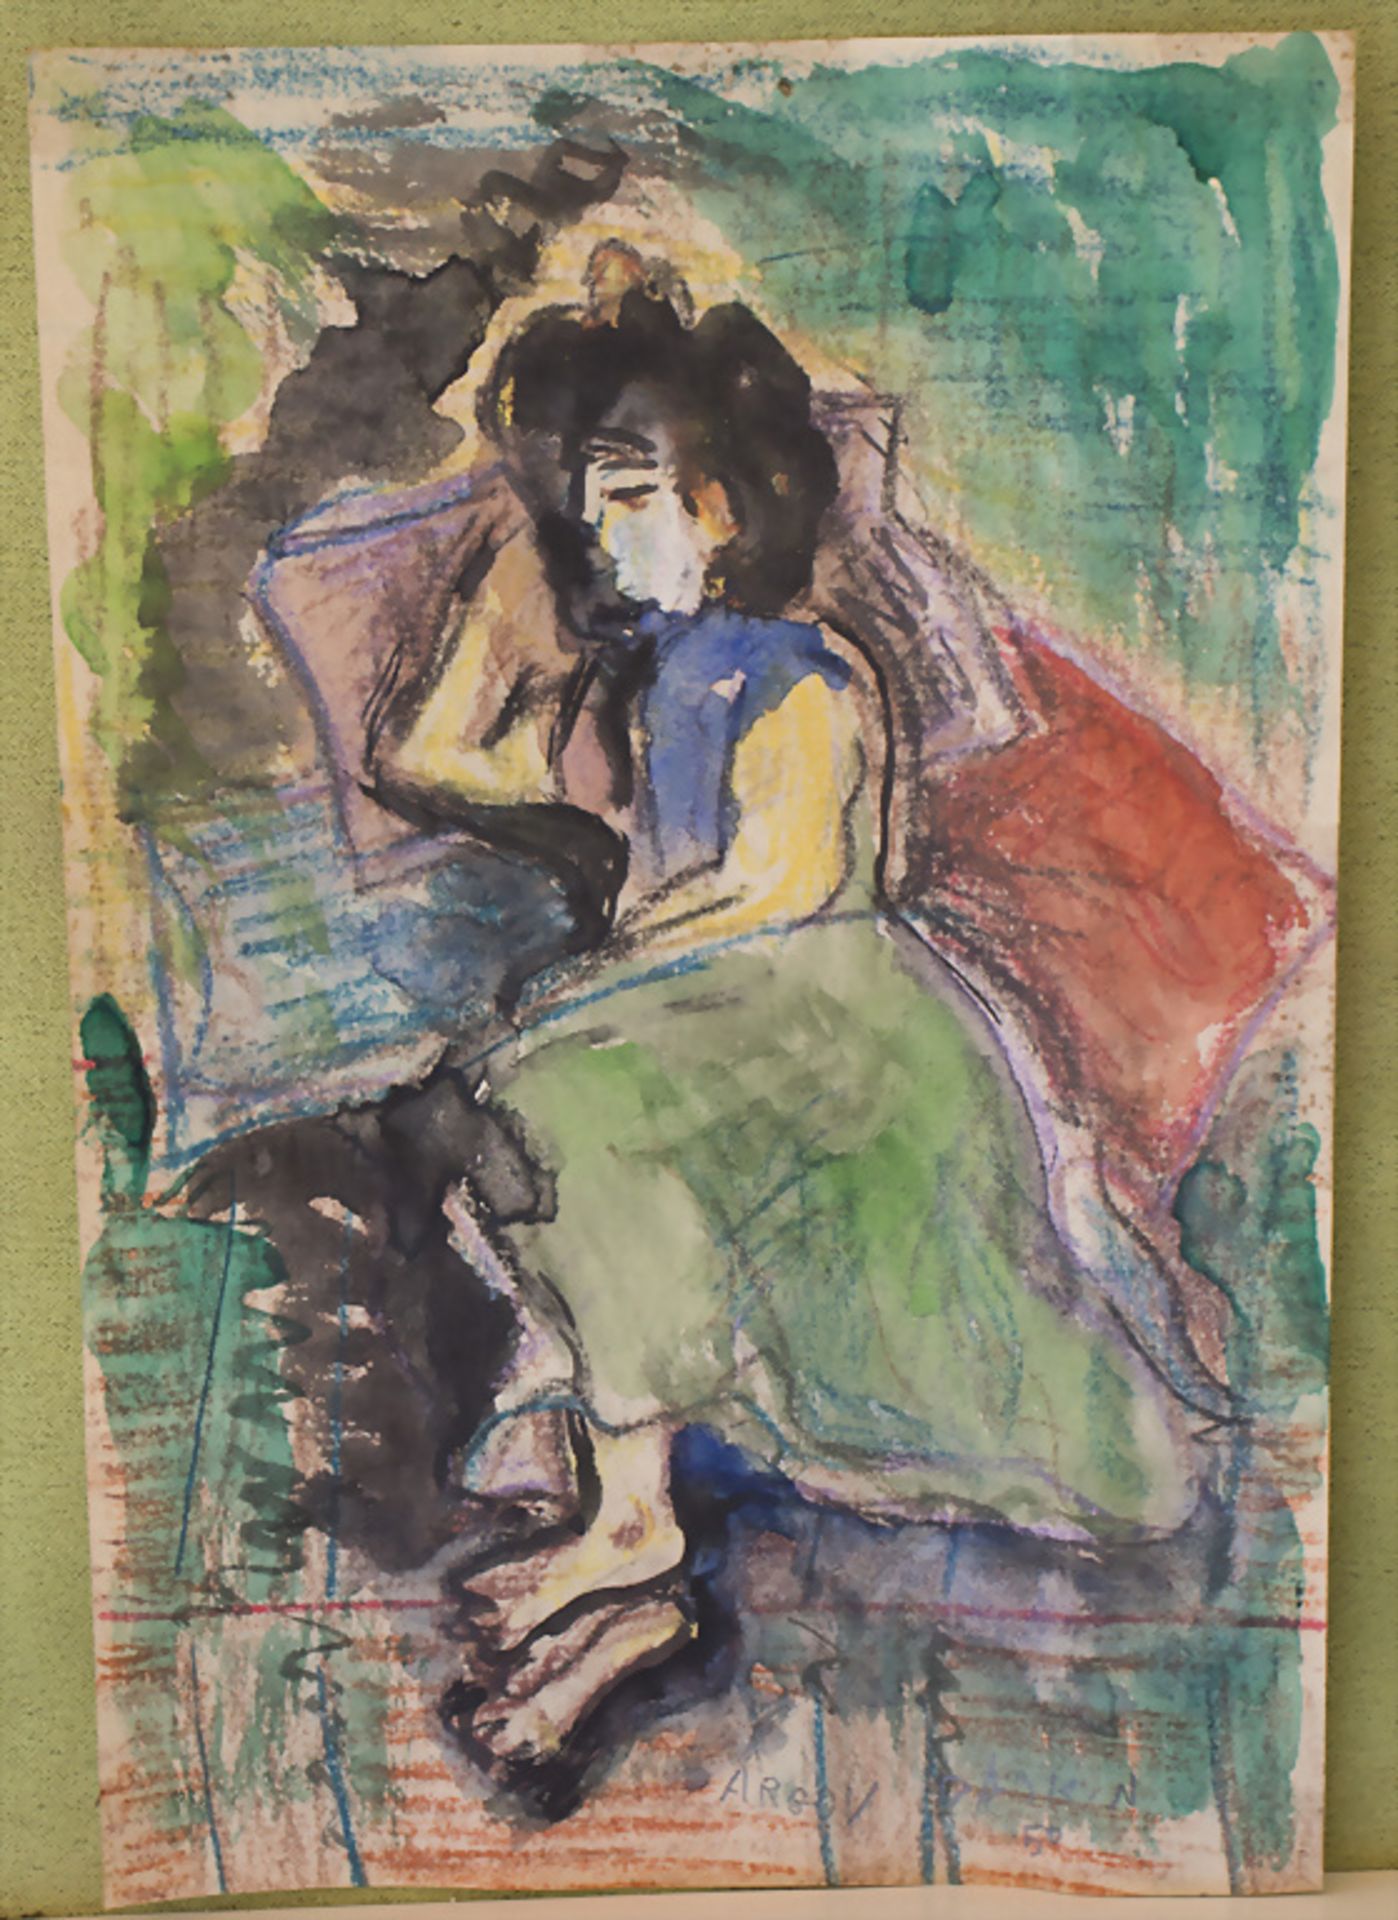 Mihail Argov (1920-1982), 'Schlafende Frau' / 'A sleeping woman', Paris, 1950